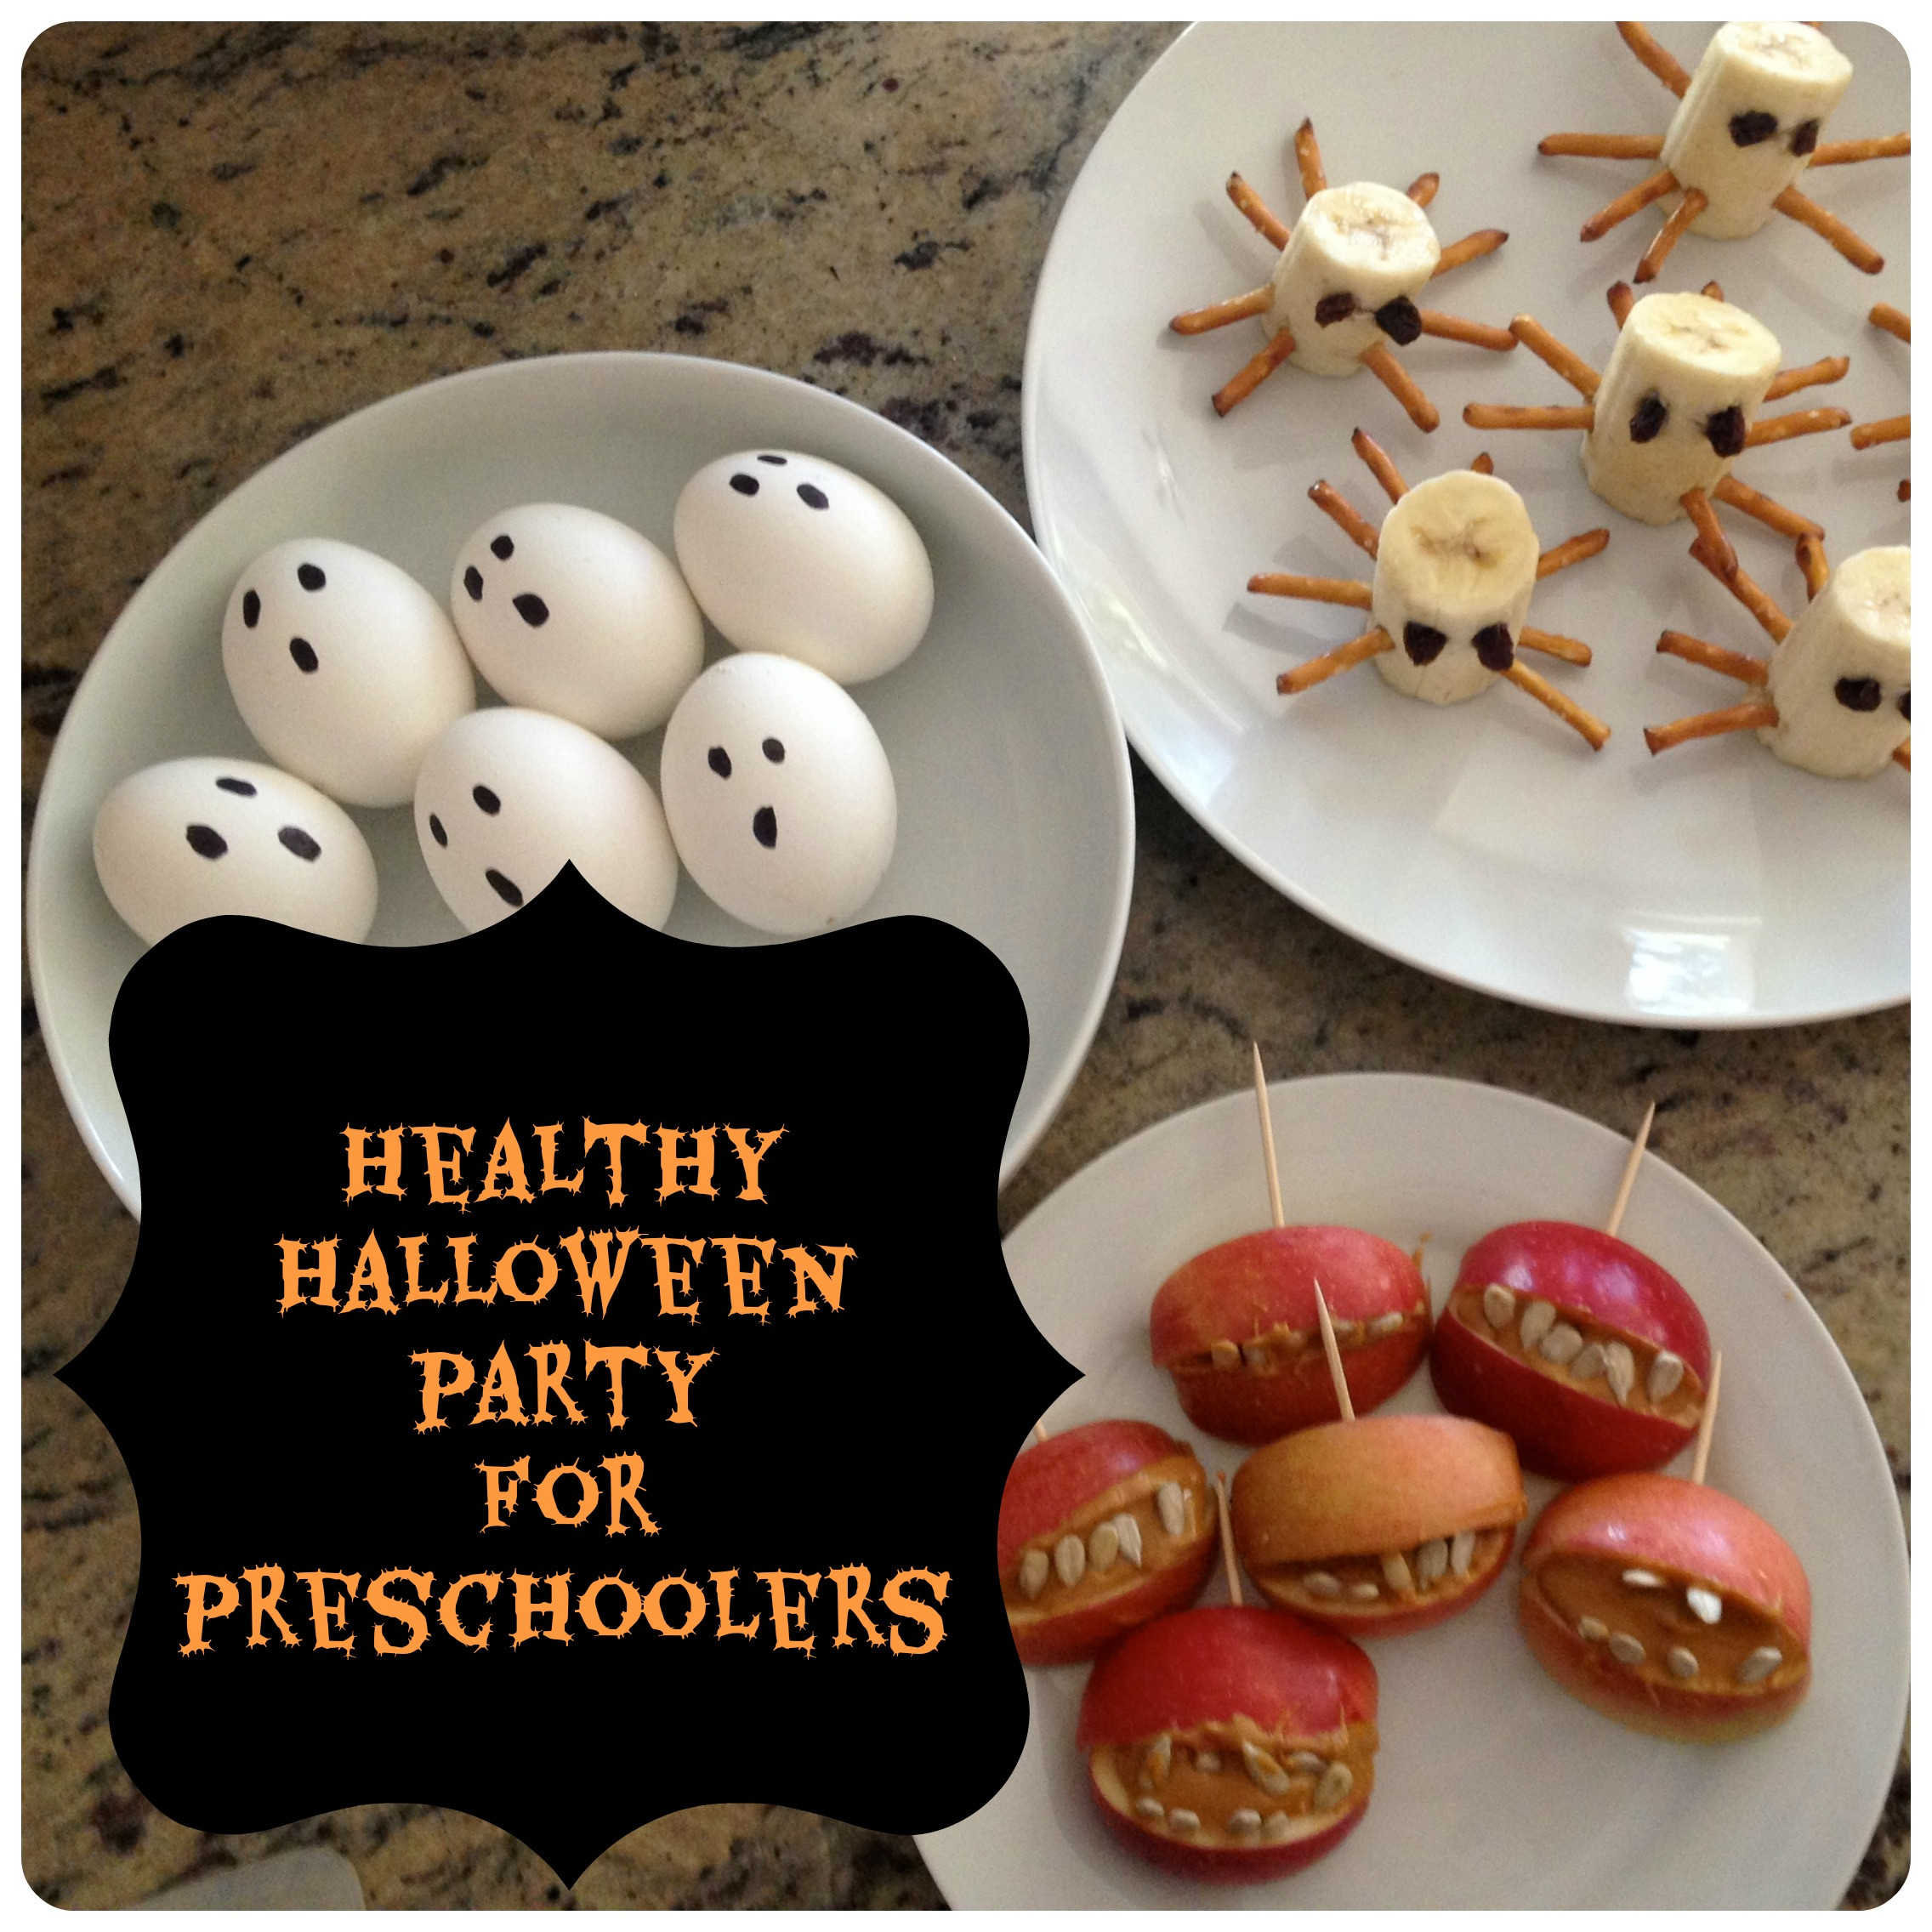 Make Preschool Halloween Party Healthy Food Ideas
 Healthy Halloween